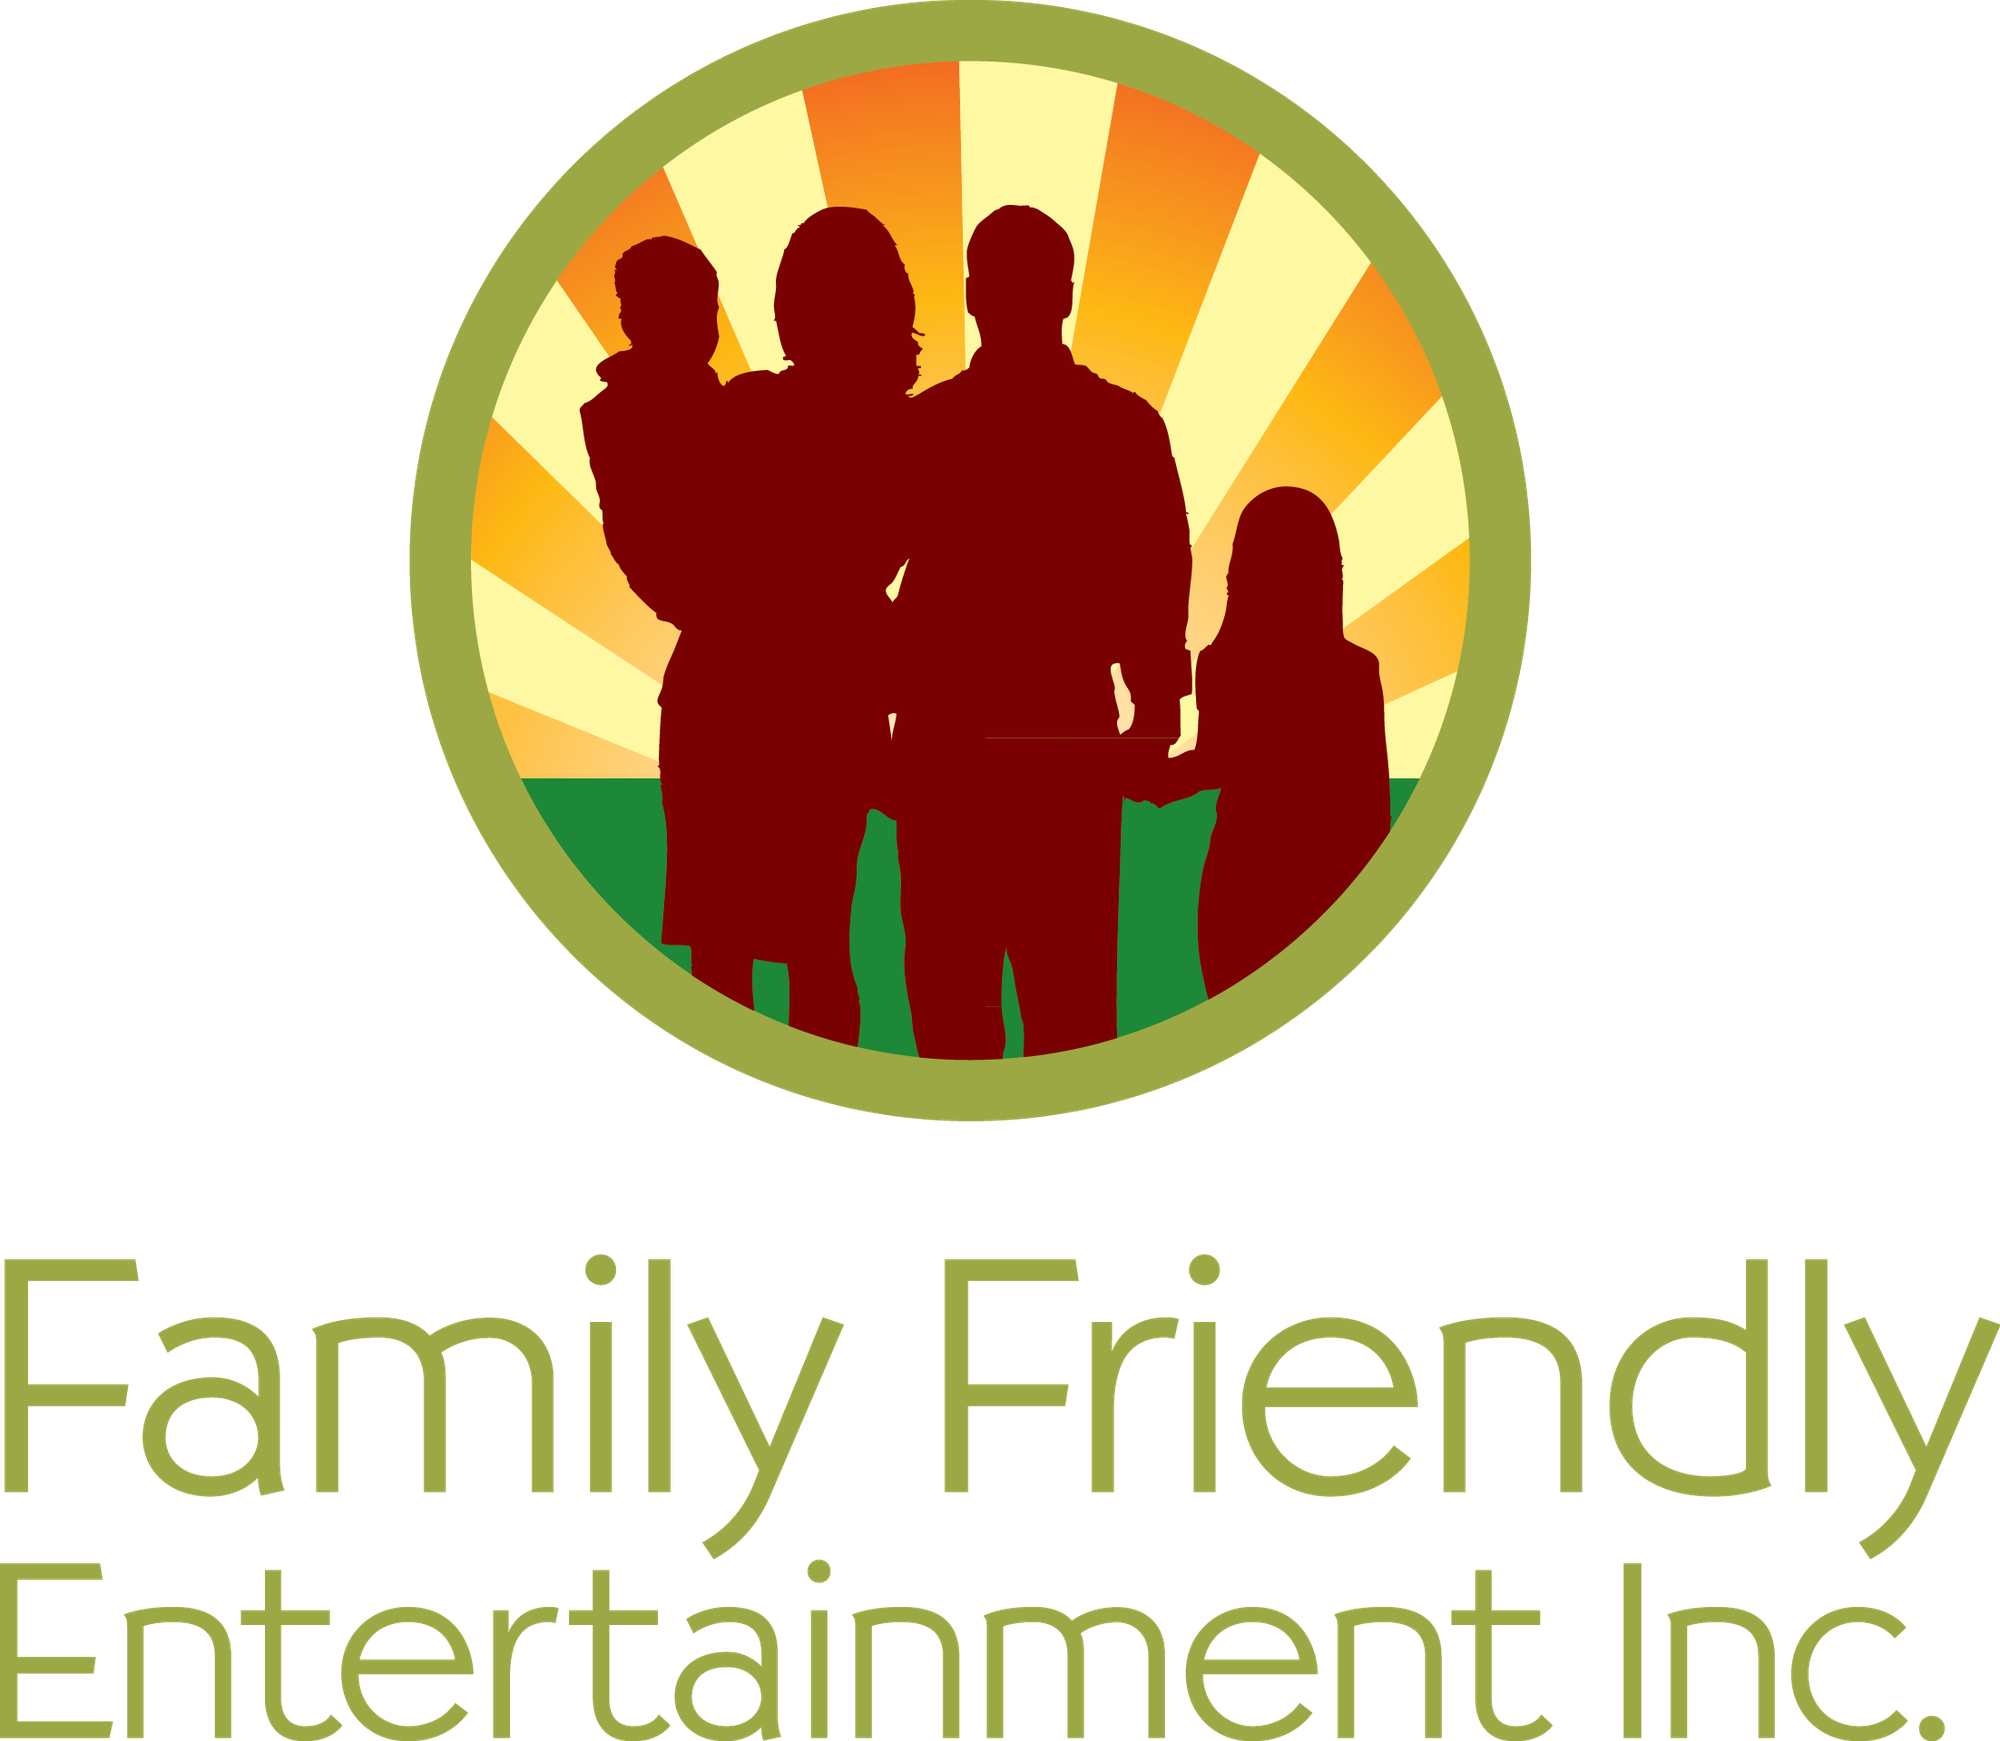 Family Friendly Entertainment Network.